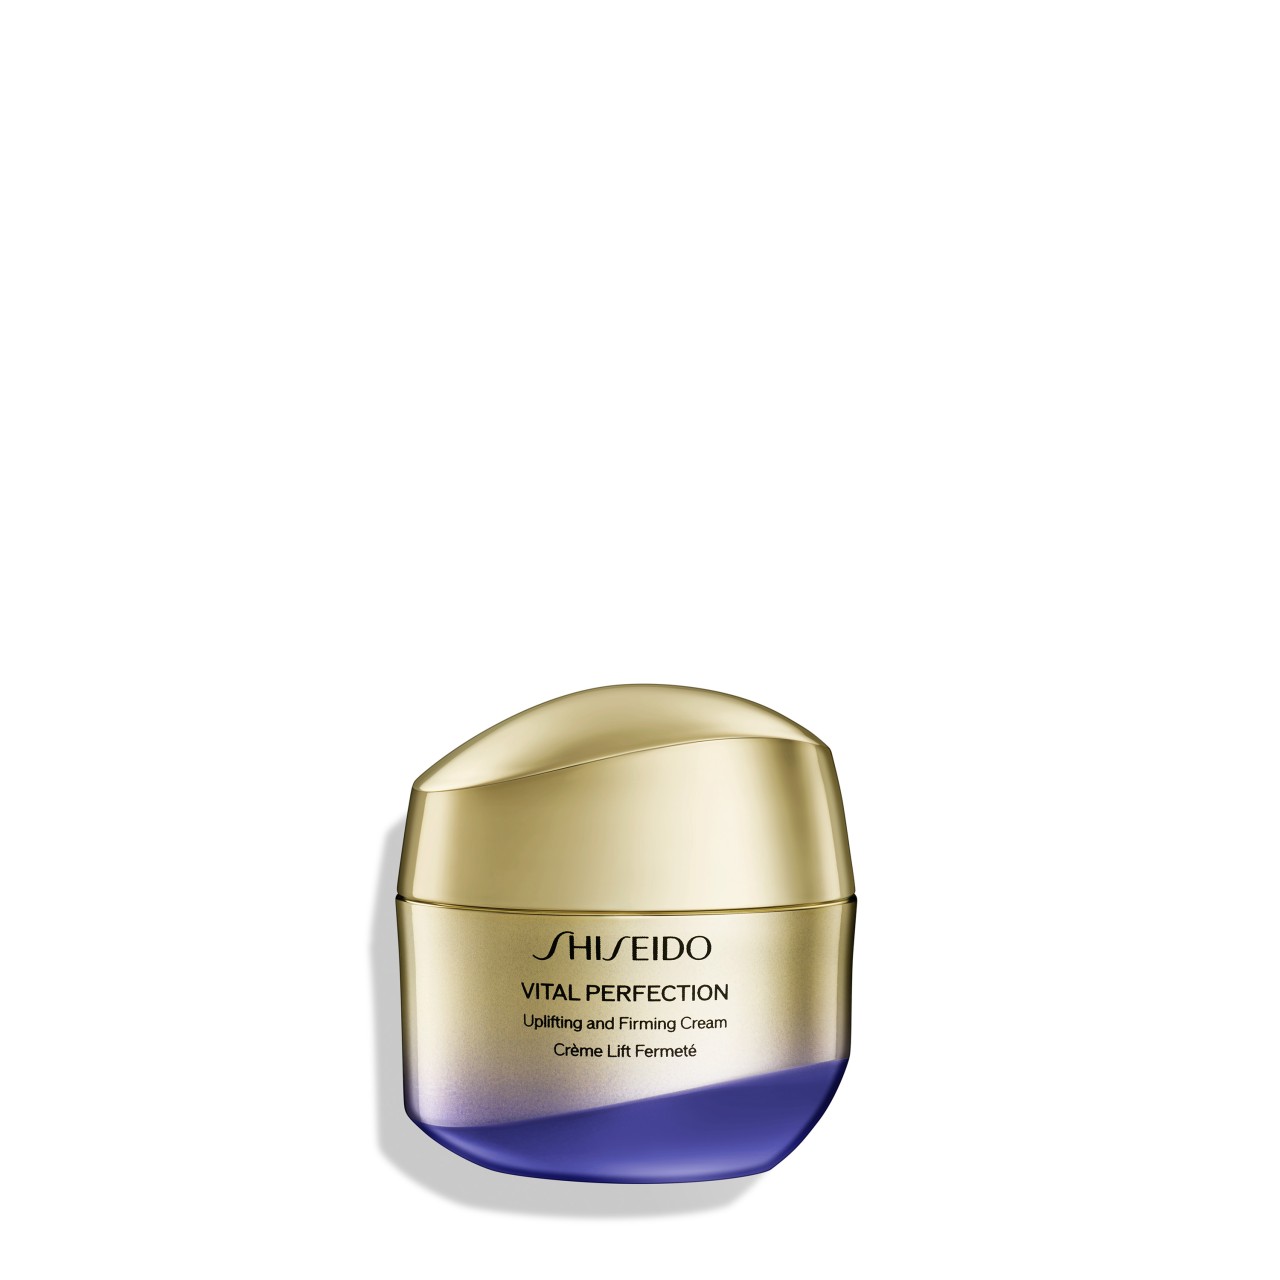 Shiseido - Vital Perfection Uplift & Firm Cream - 